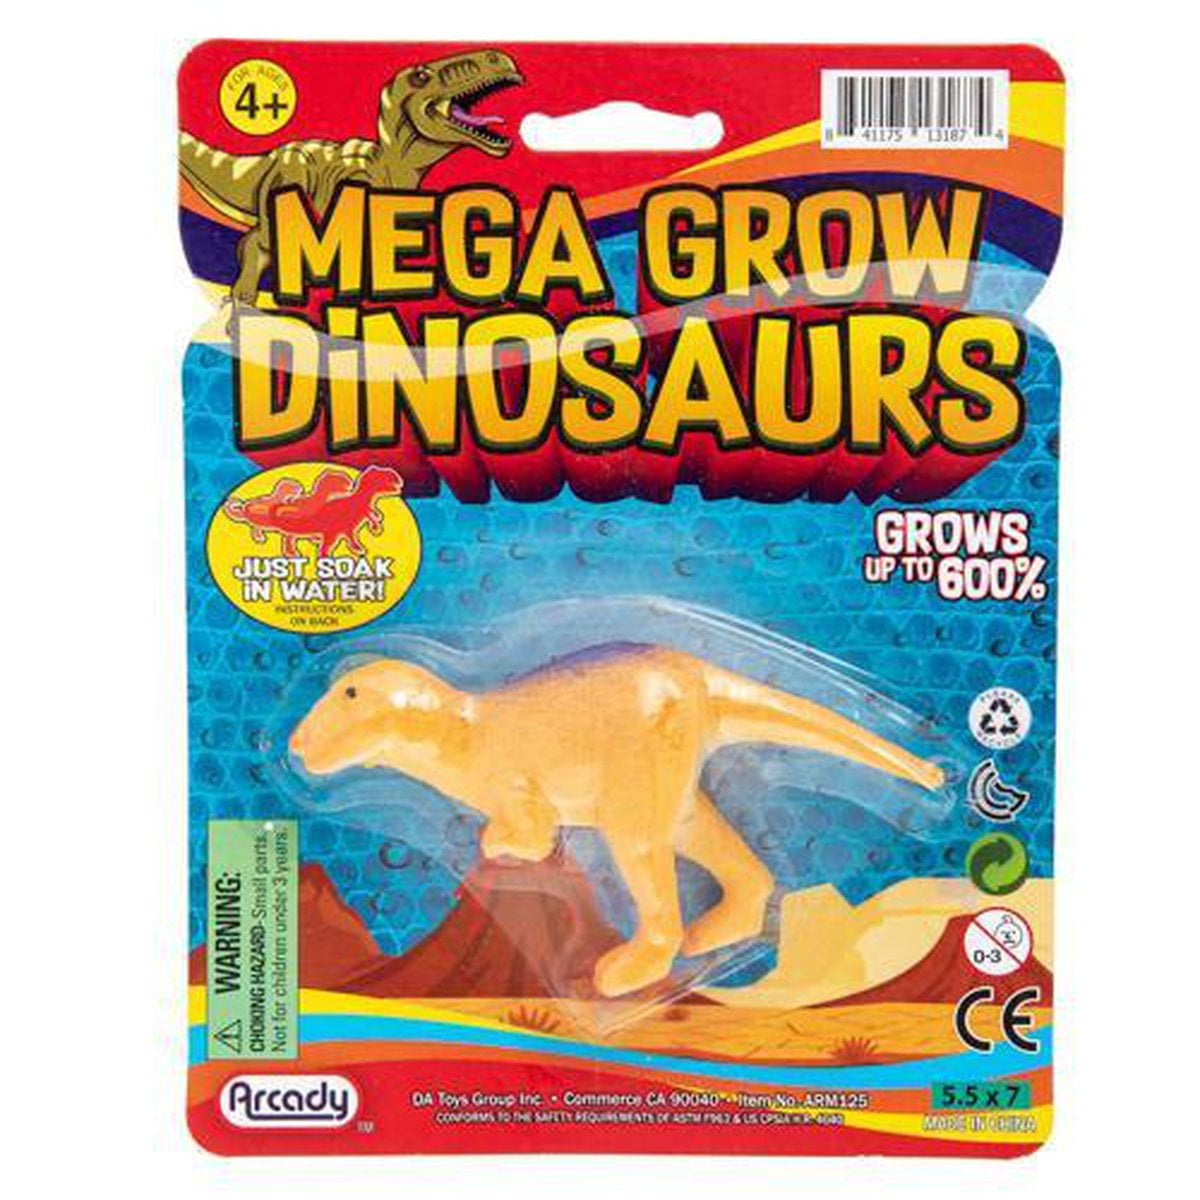 Grow Creature Dinosaur Toy Grows up to 600% Its Original Size Reusable! 